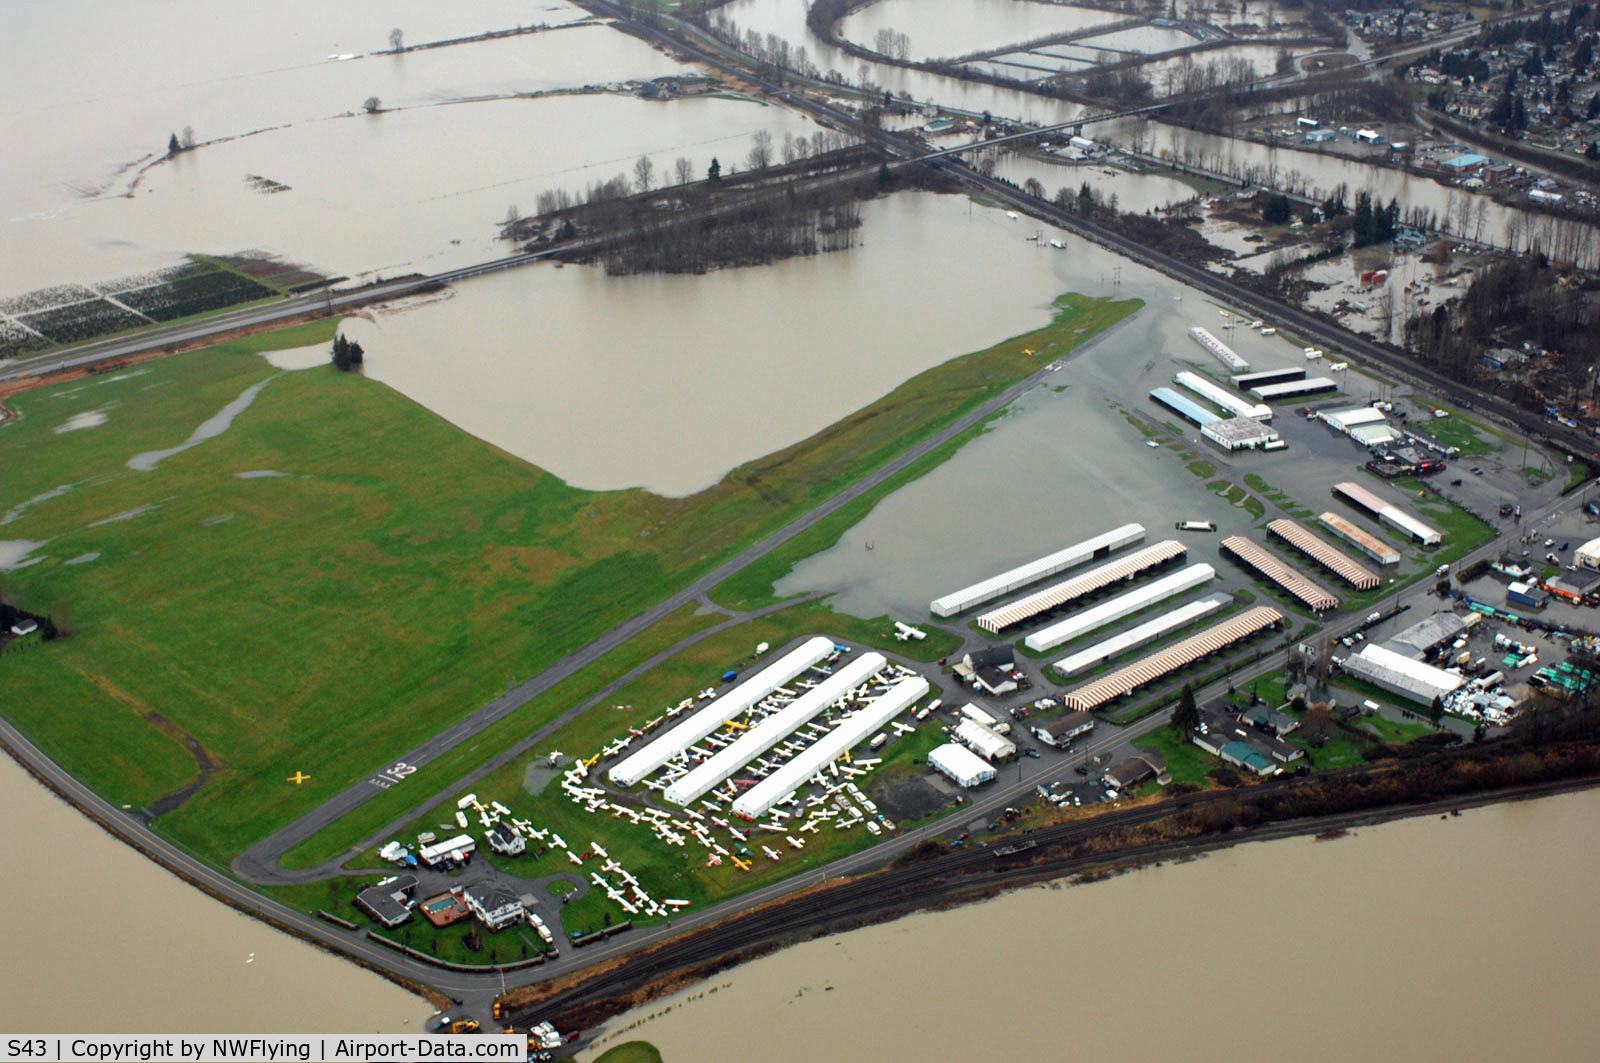 Harvey Field Airport (S43) - 2009 Flood View